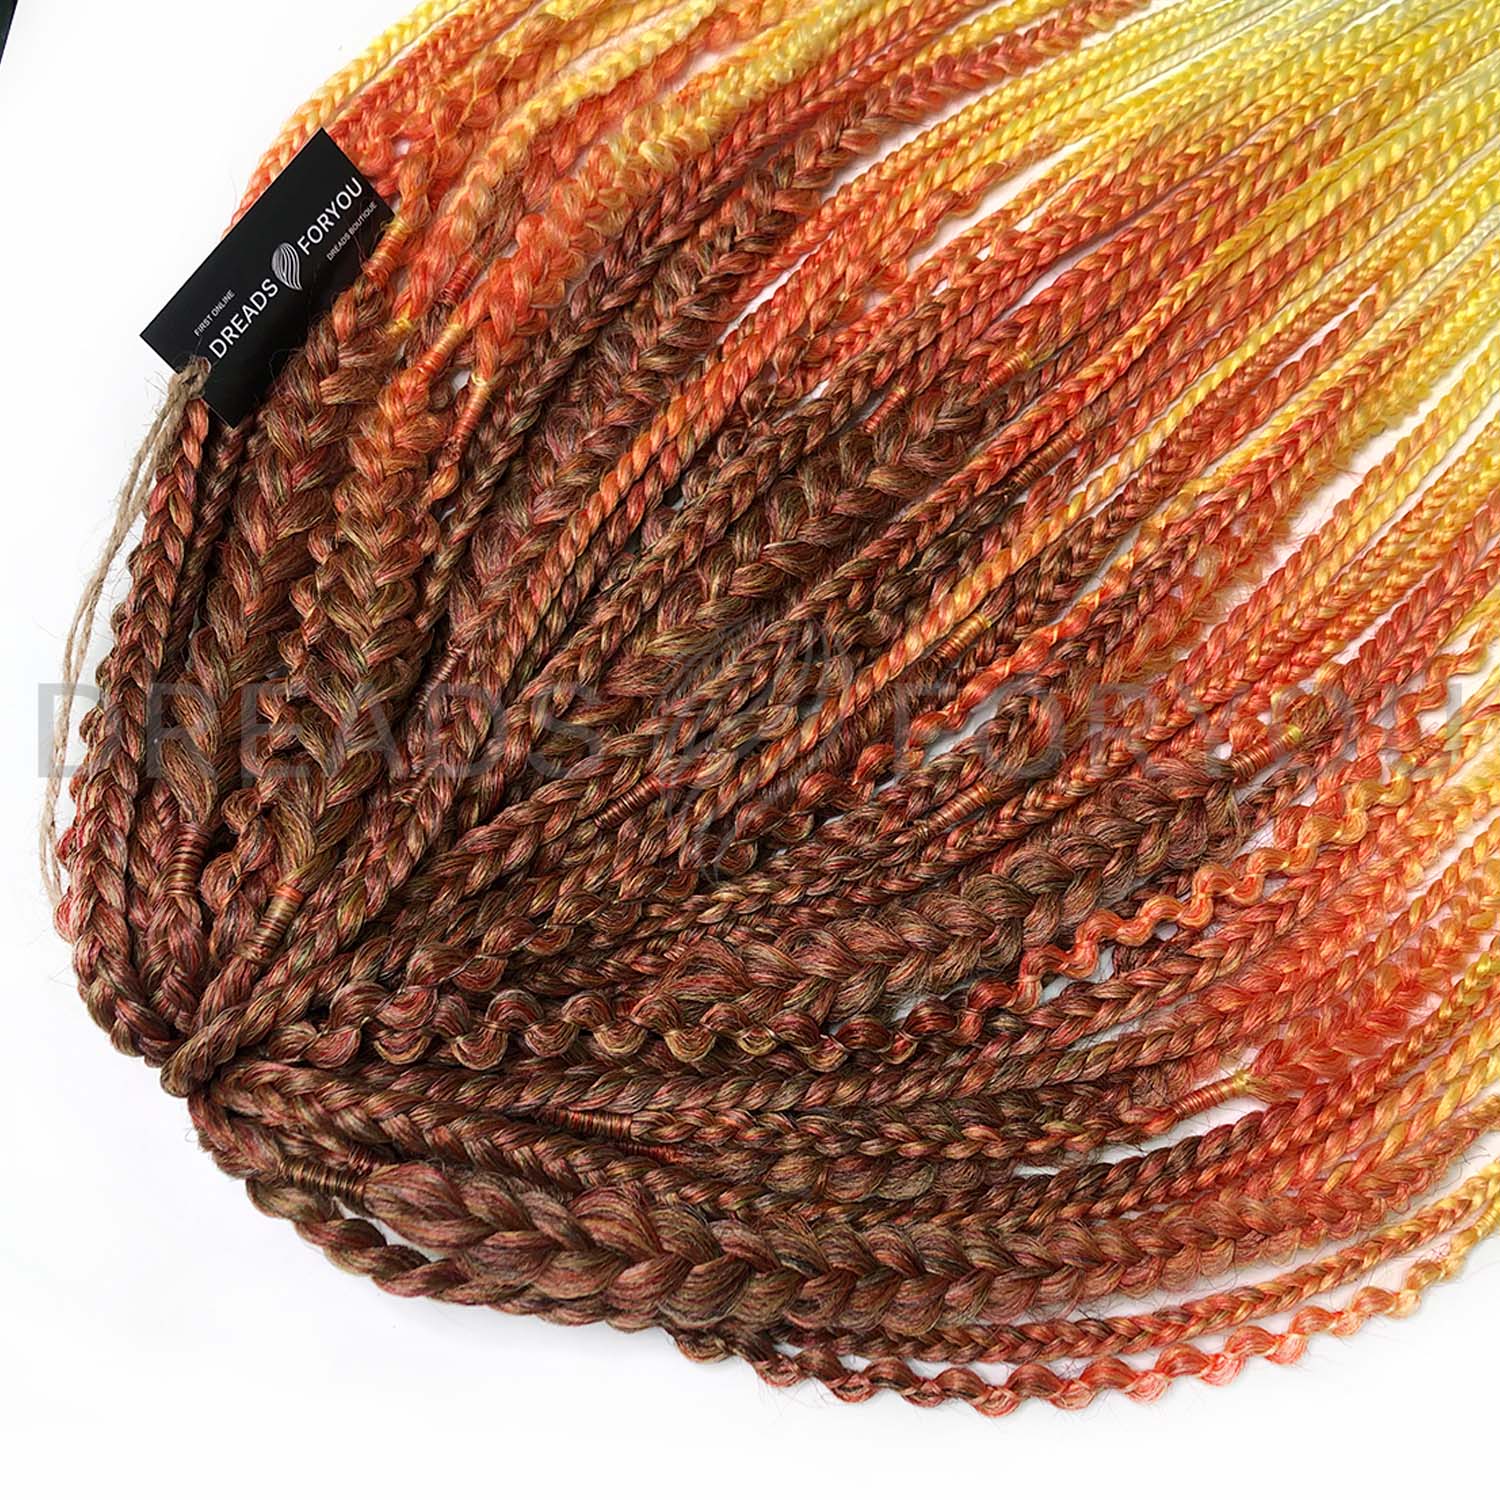 DE Textured braids Red/Yellow/White STOCK